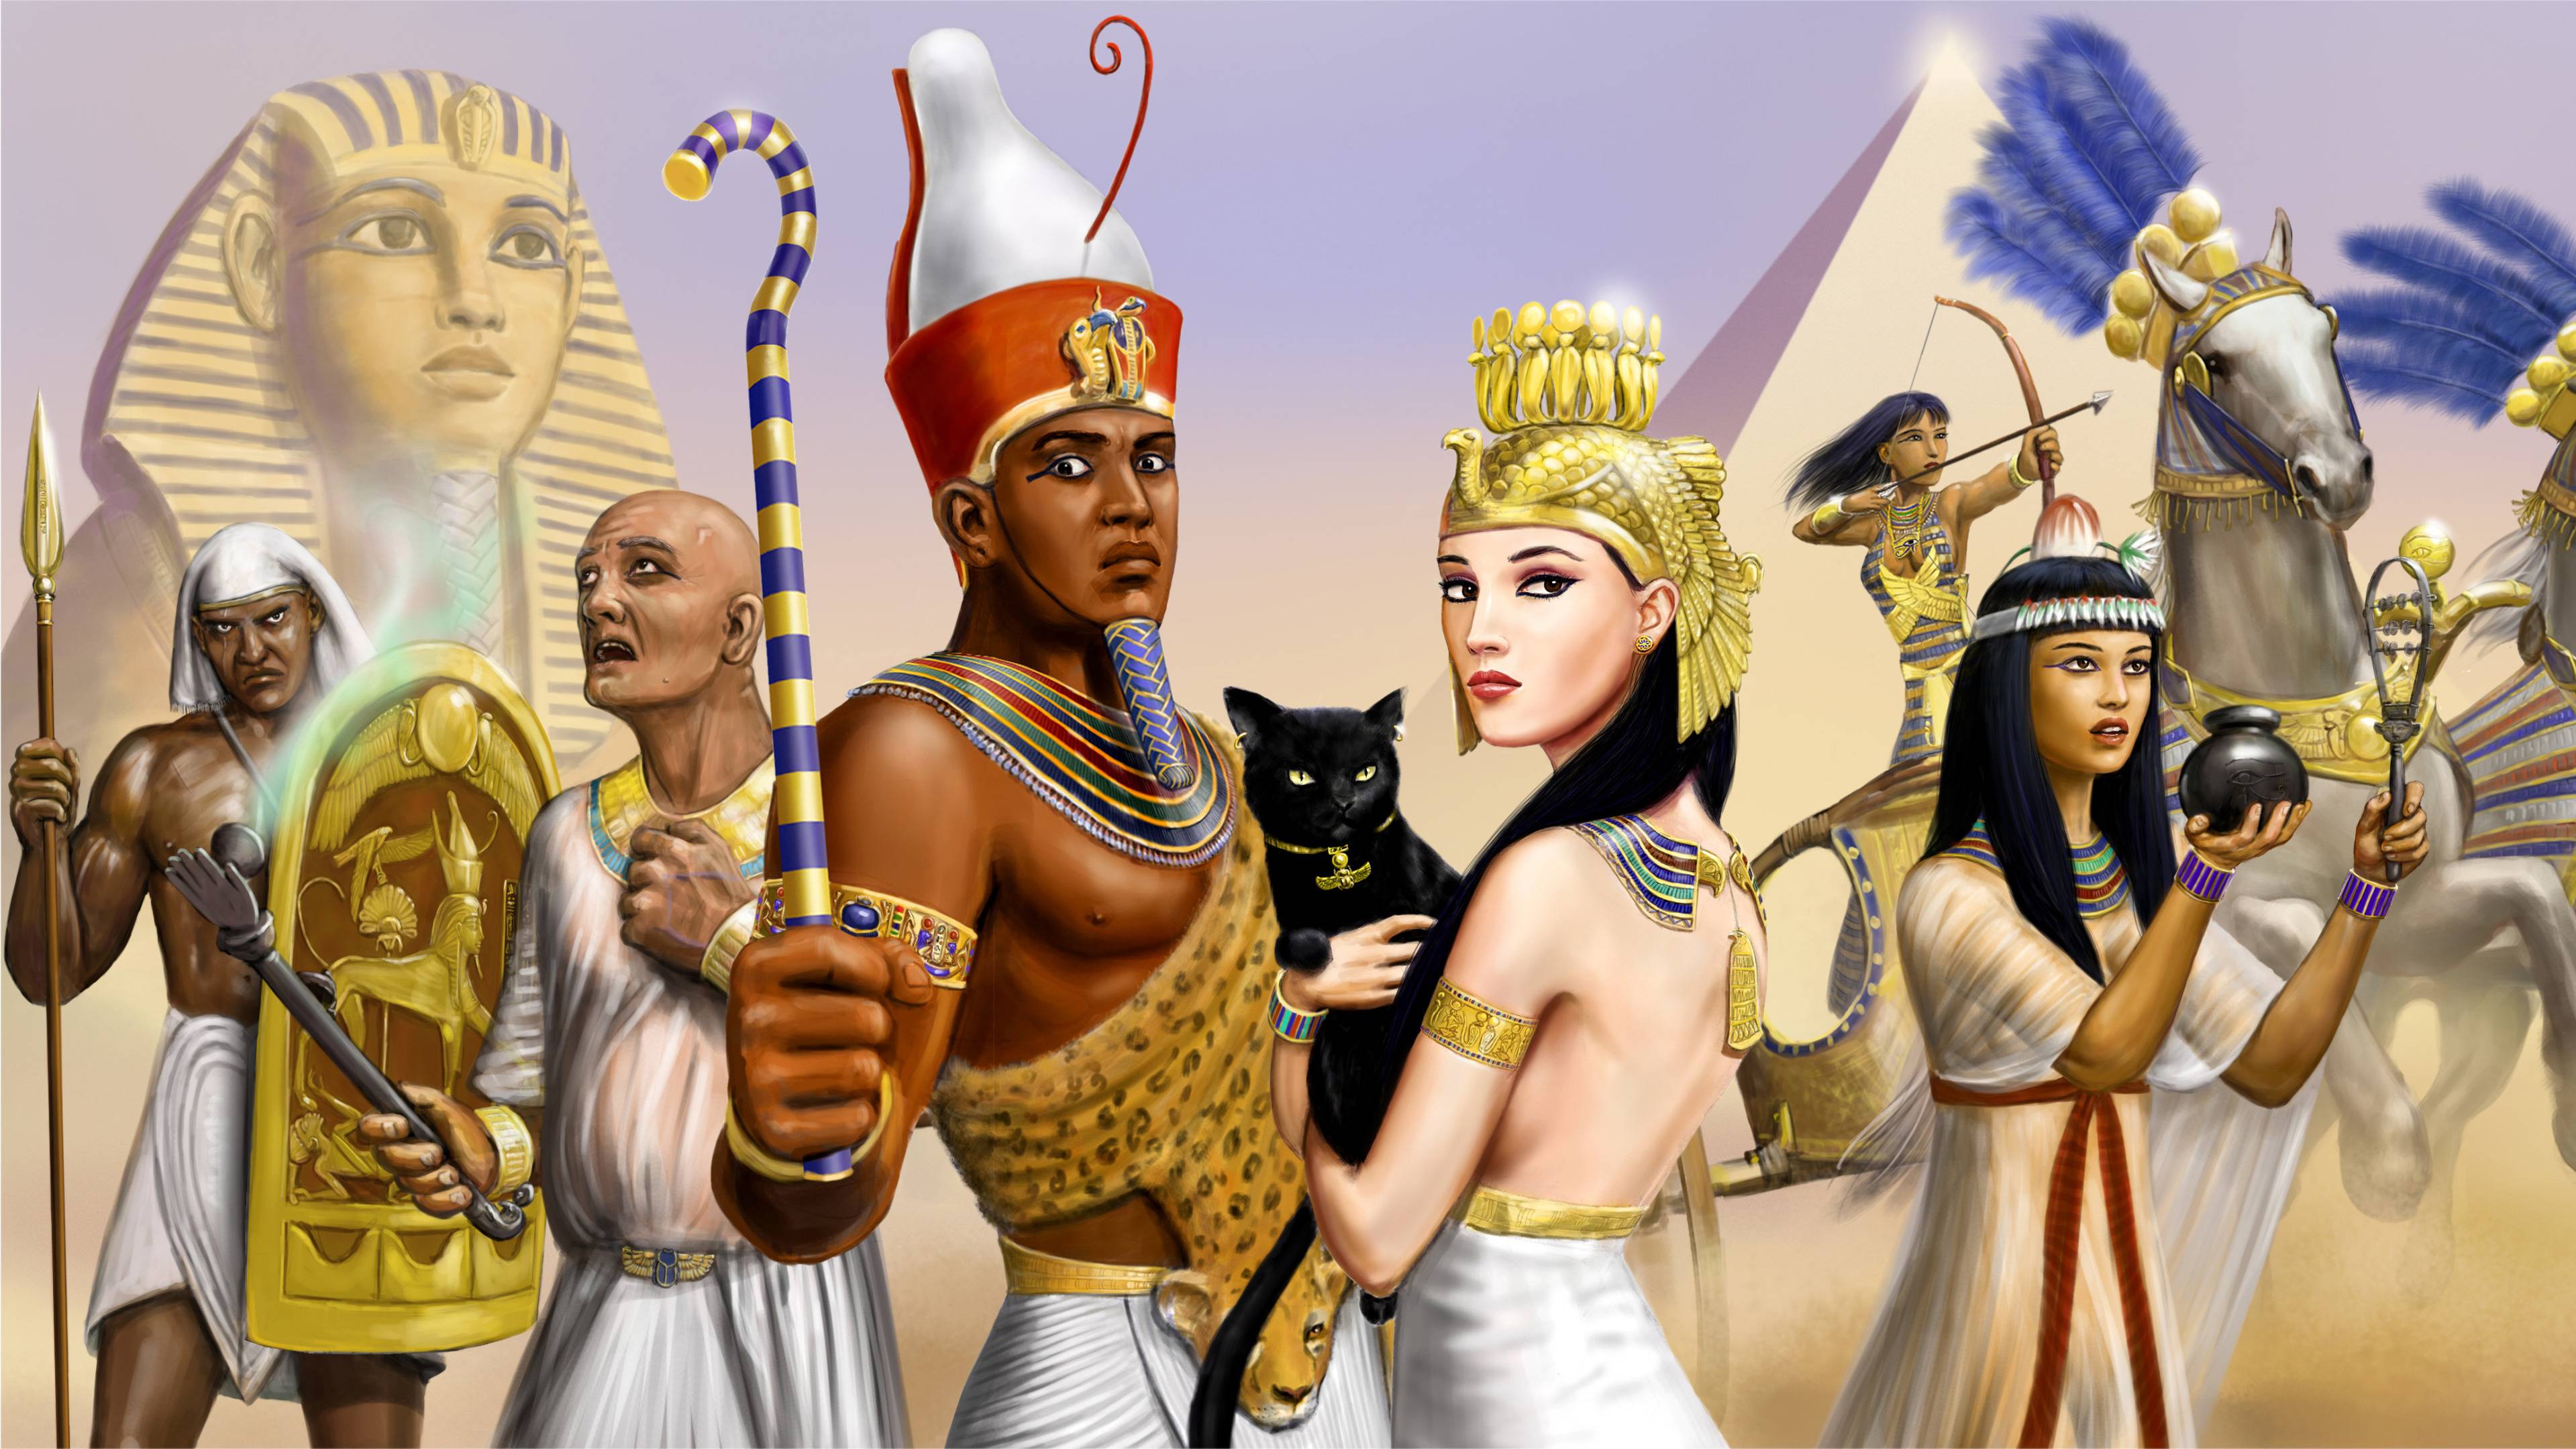 Ancient Egypt Fantasy Art widescreen wallpaper. Wide